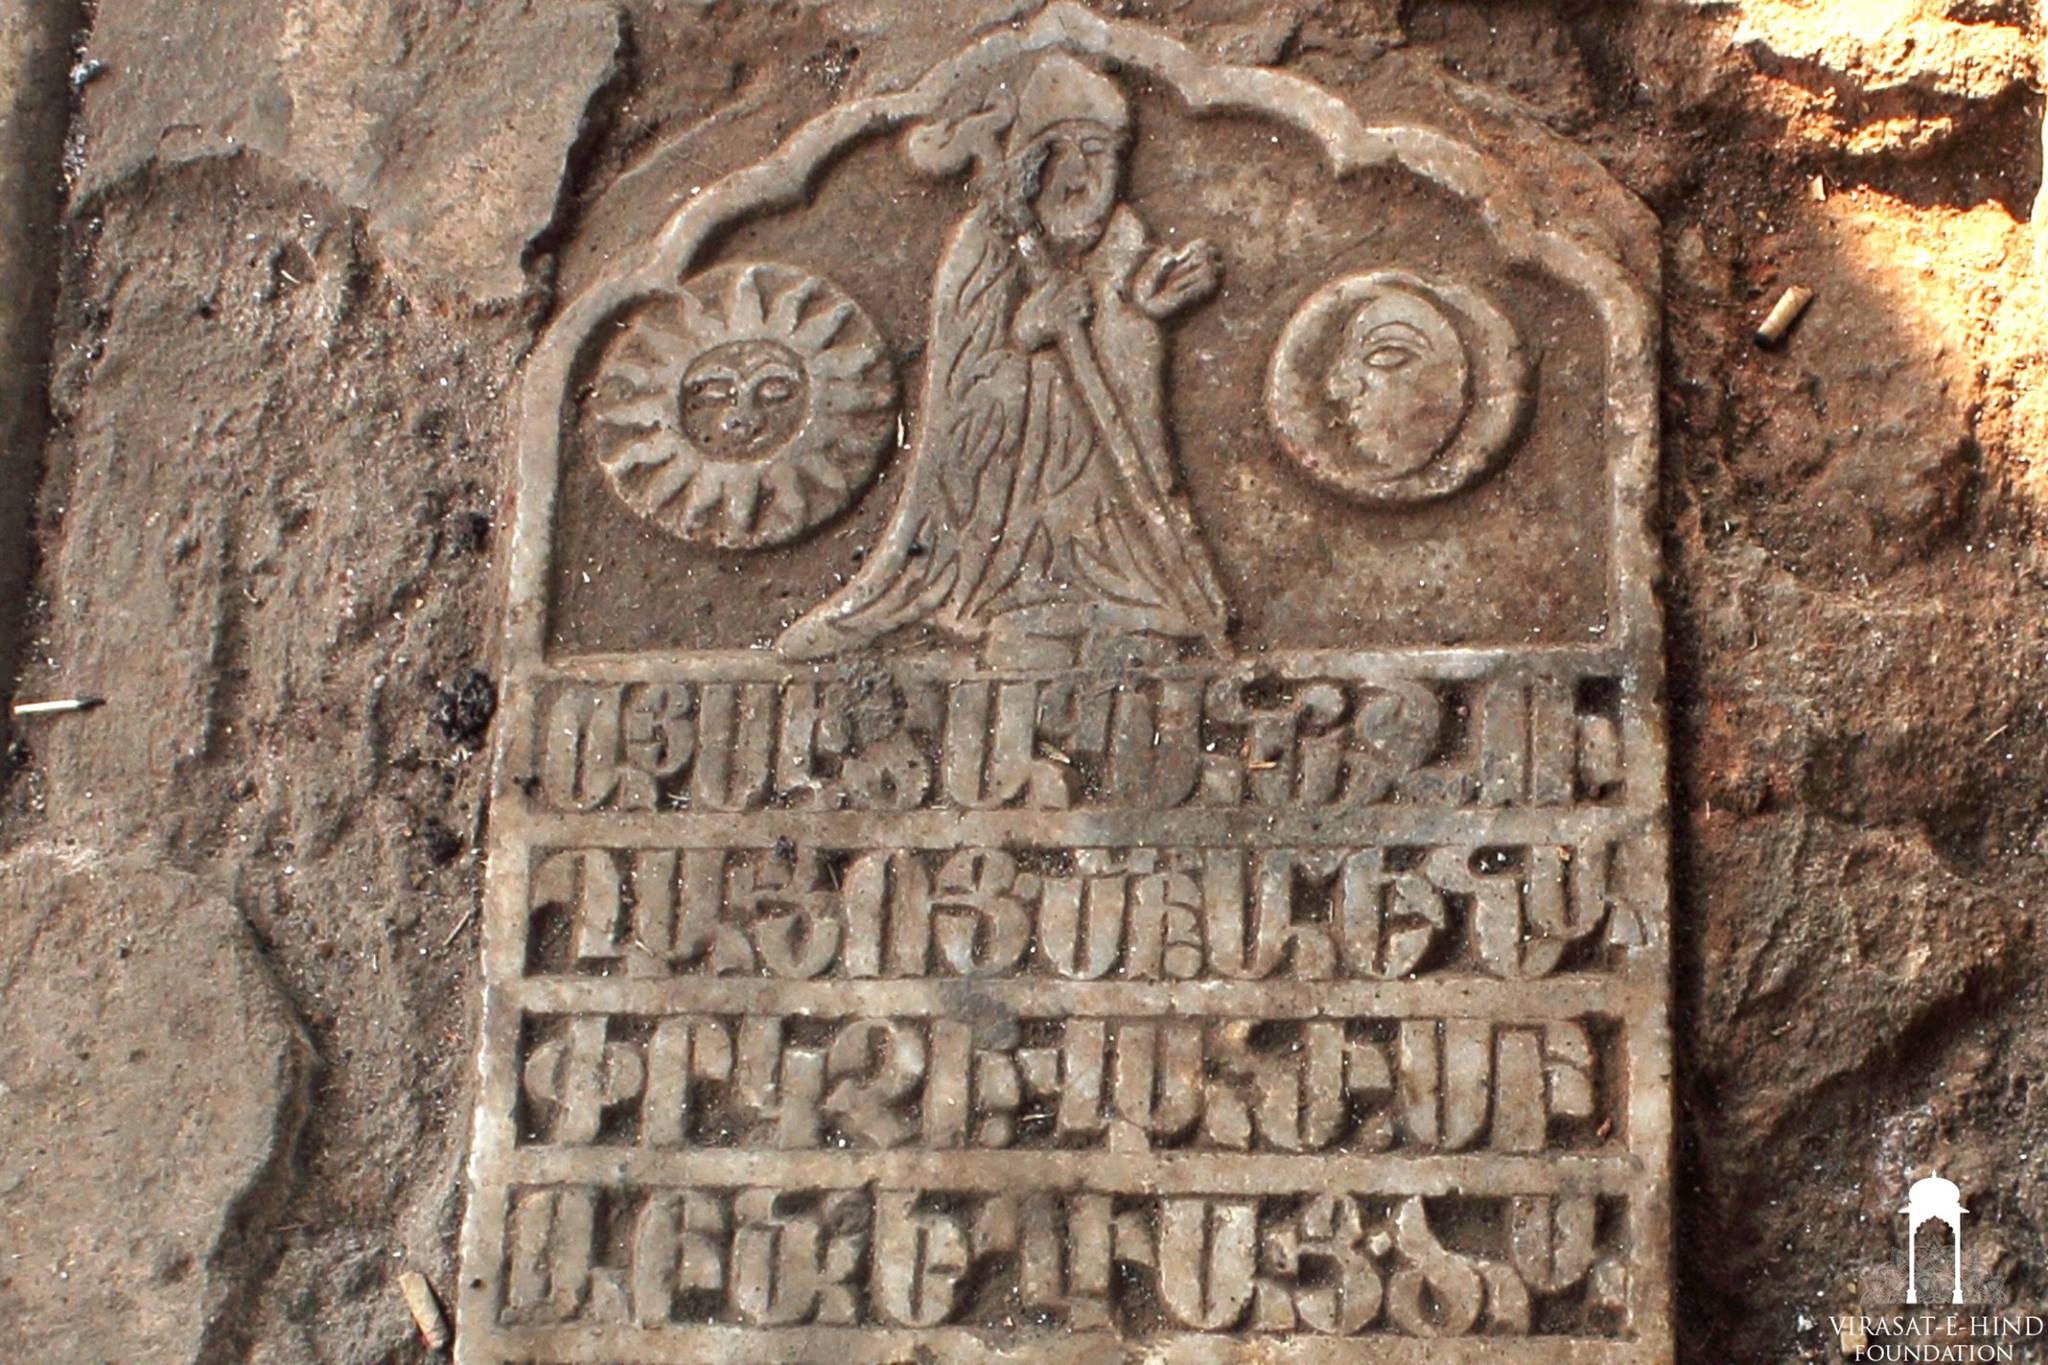 Armenian script on stones in India